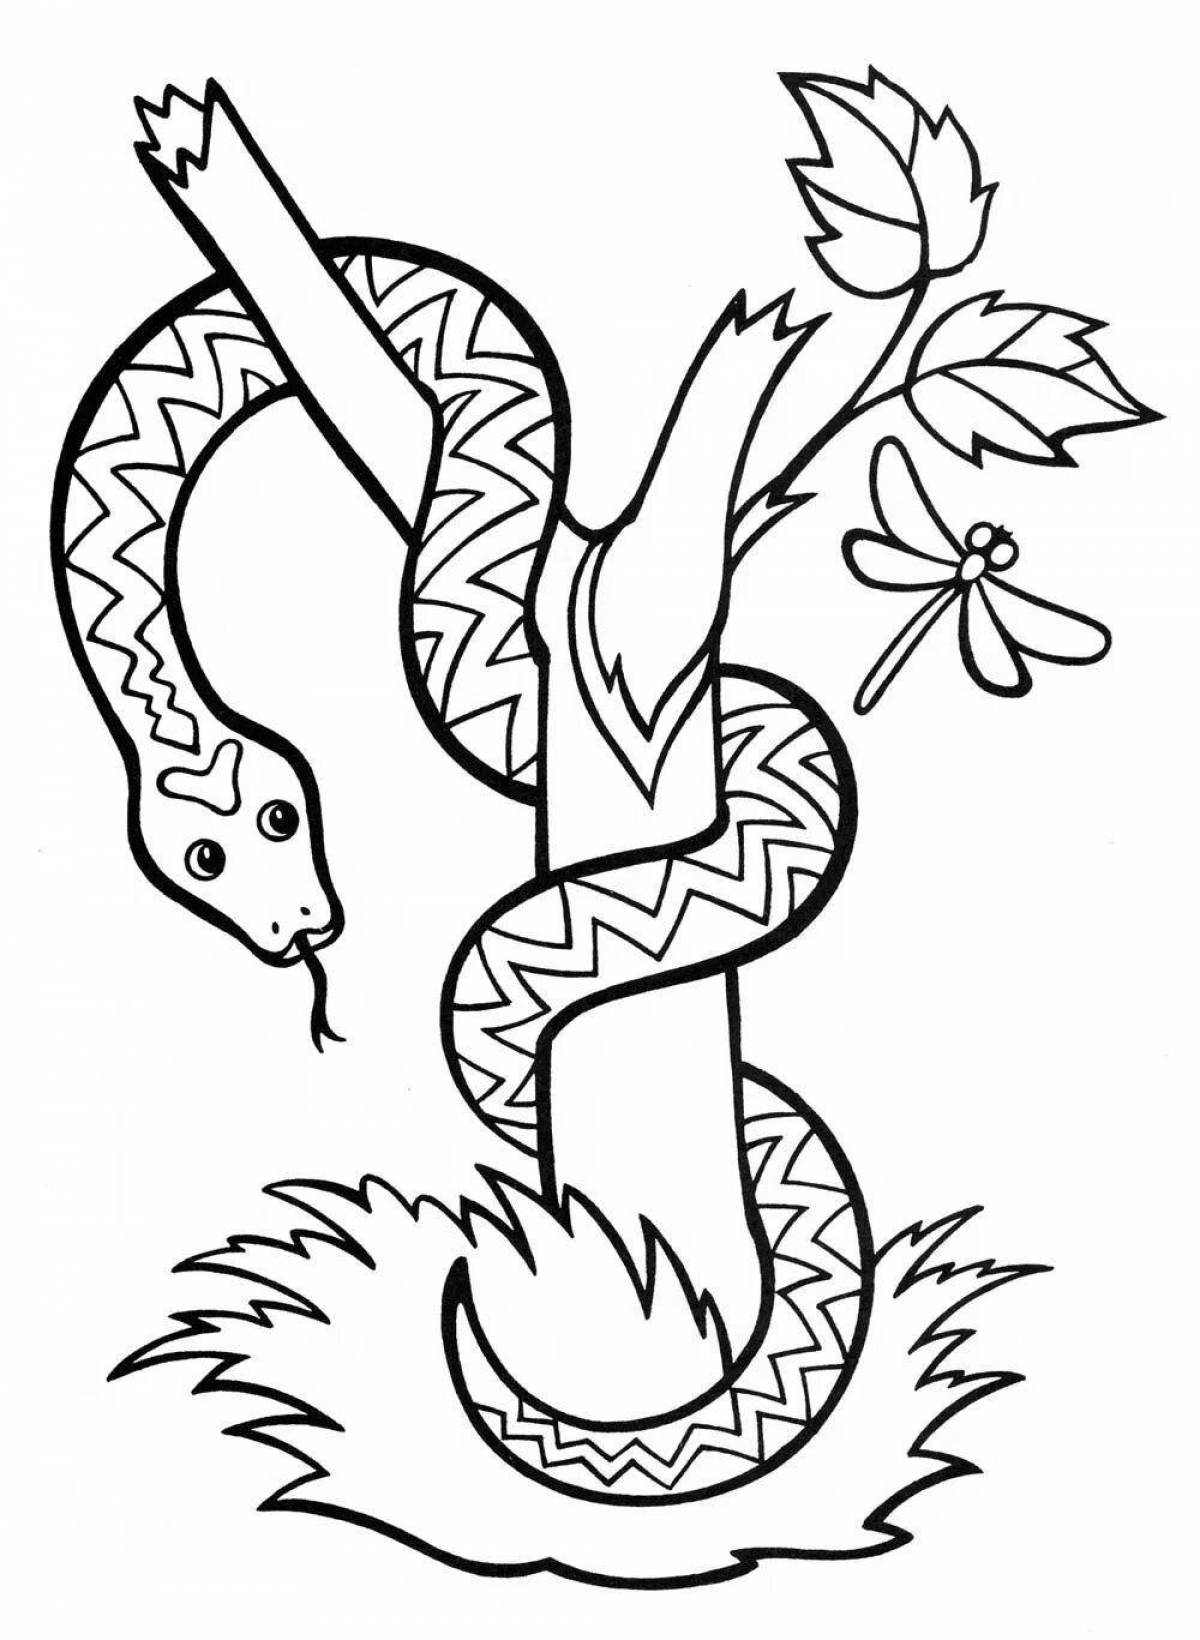 Coloring book brave snake